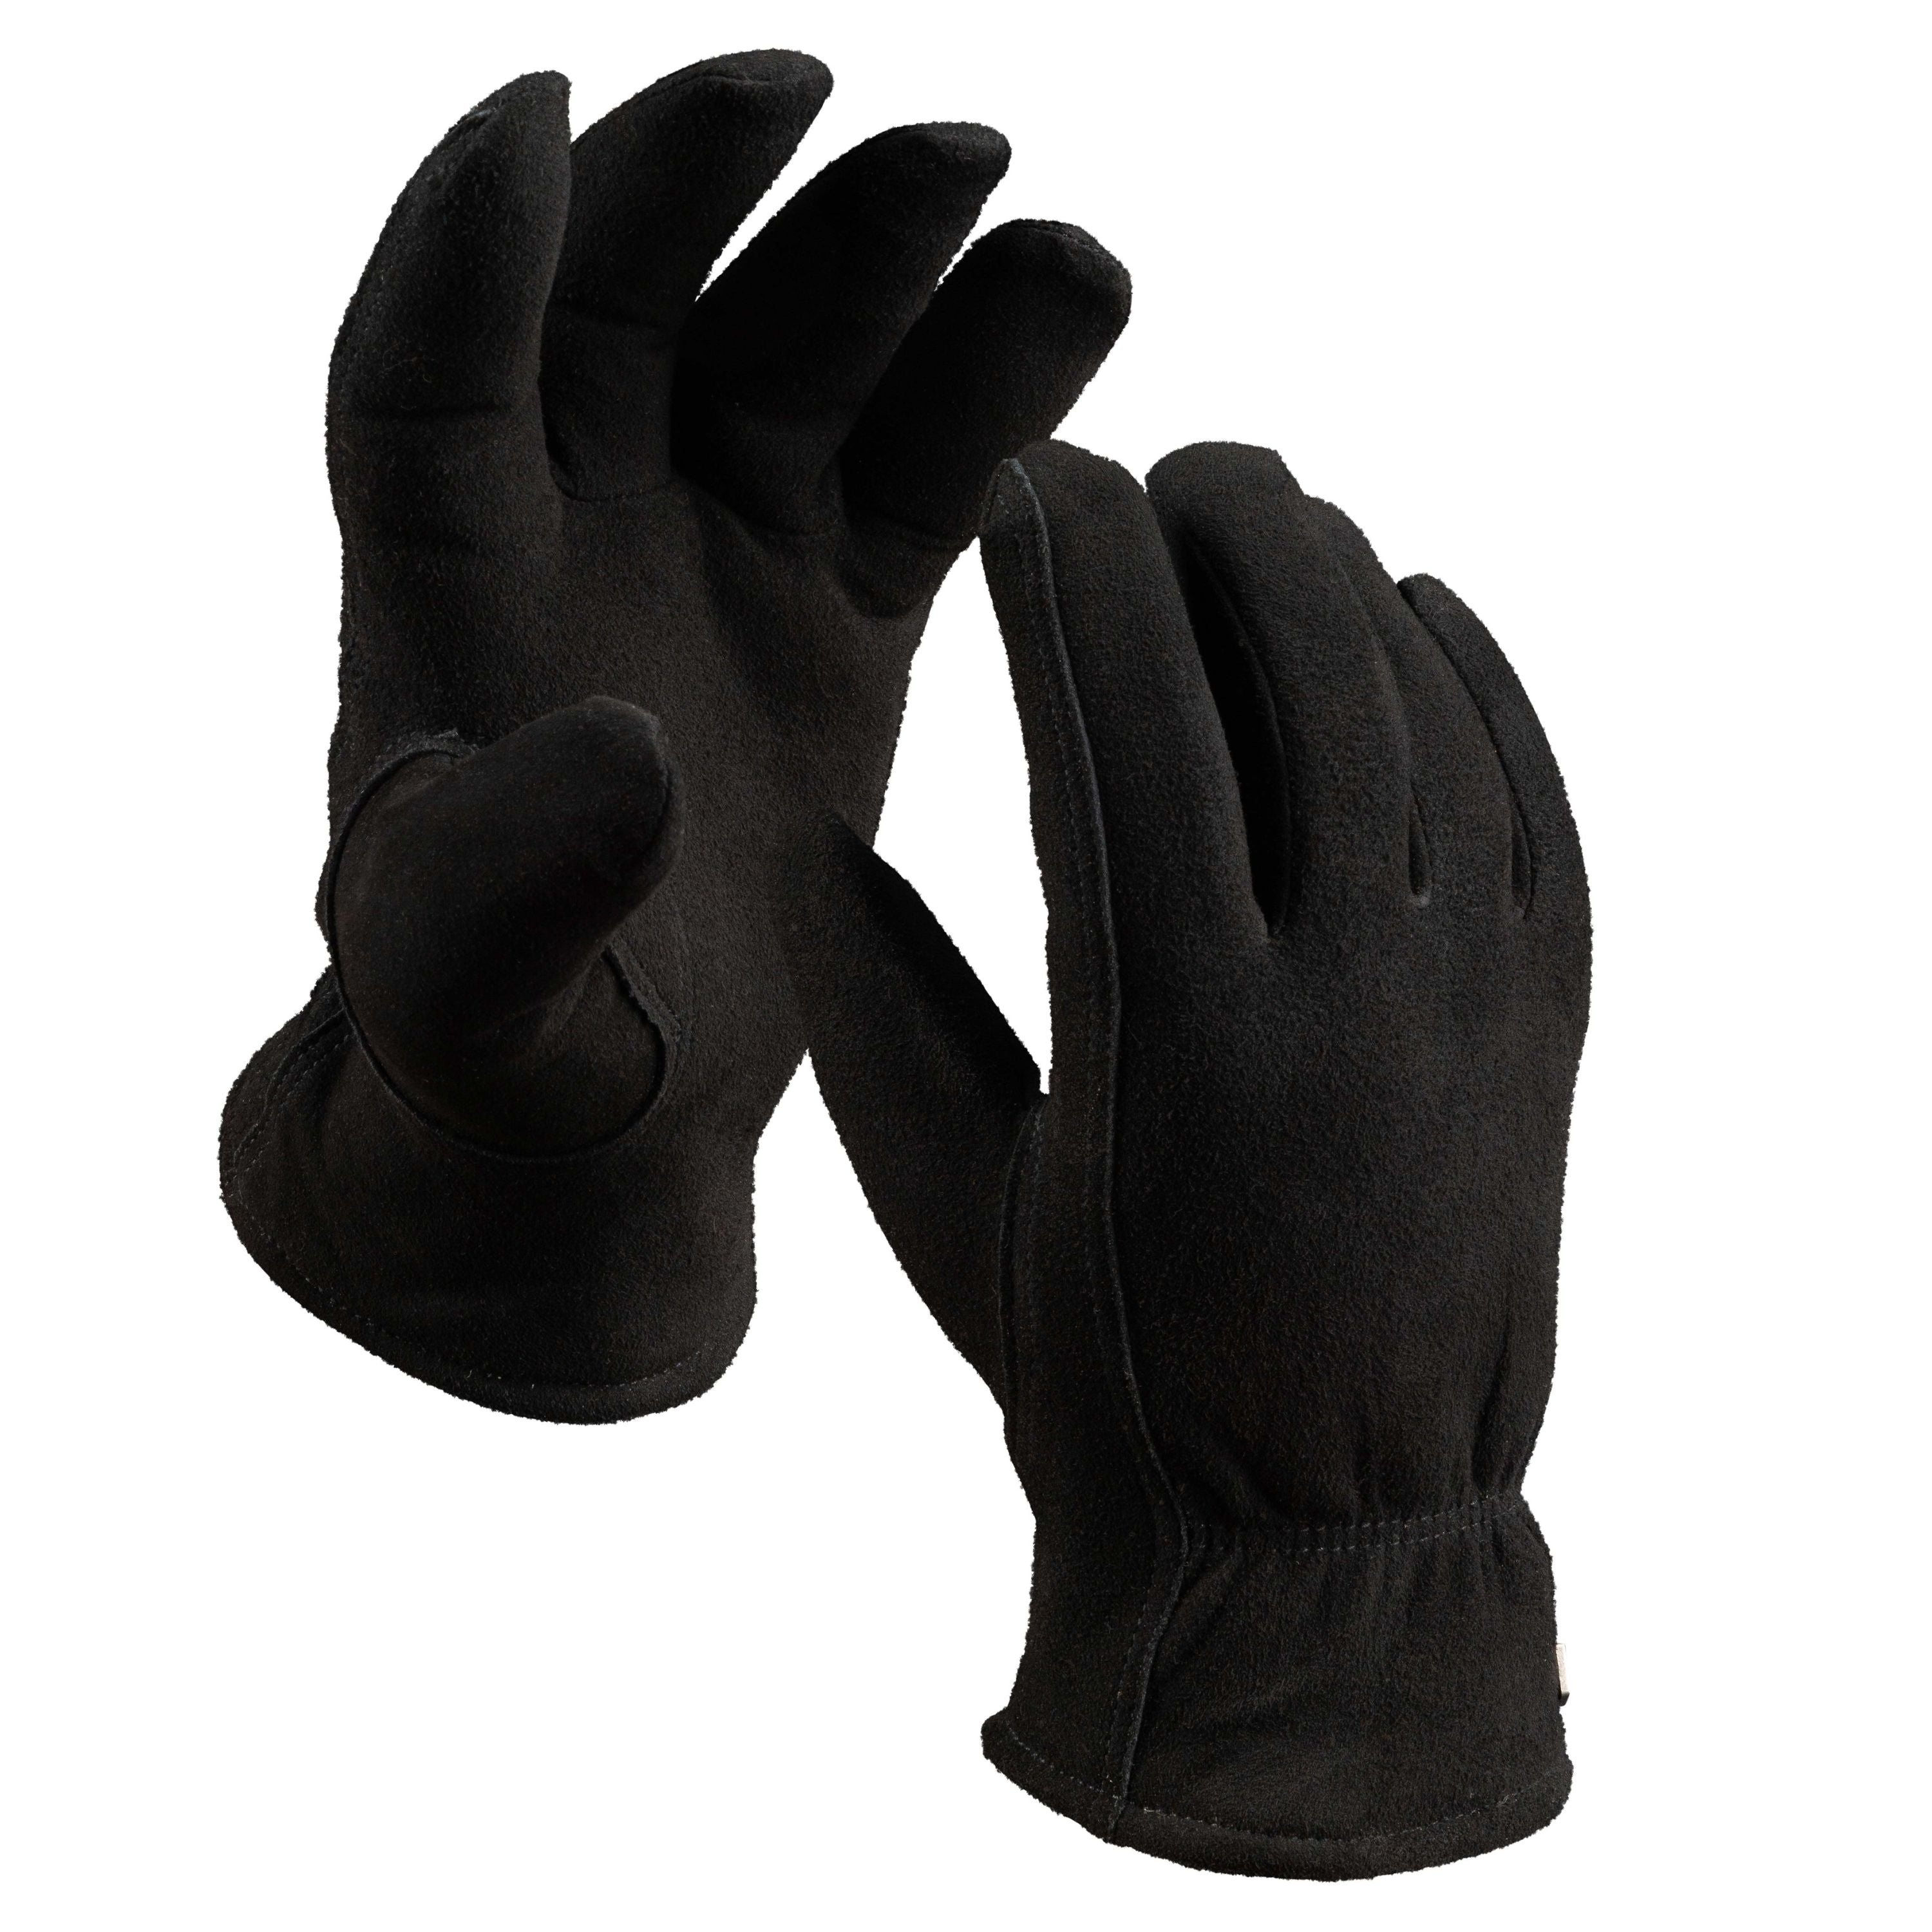 "Chamonix" Leather city gloves - Women’s